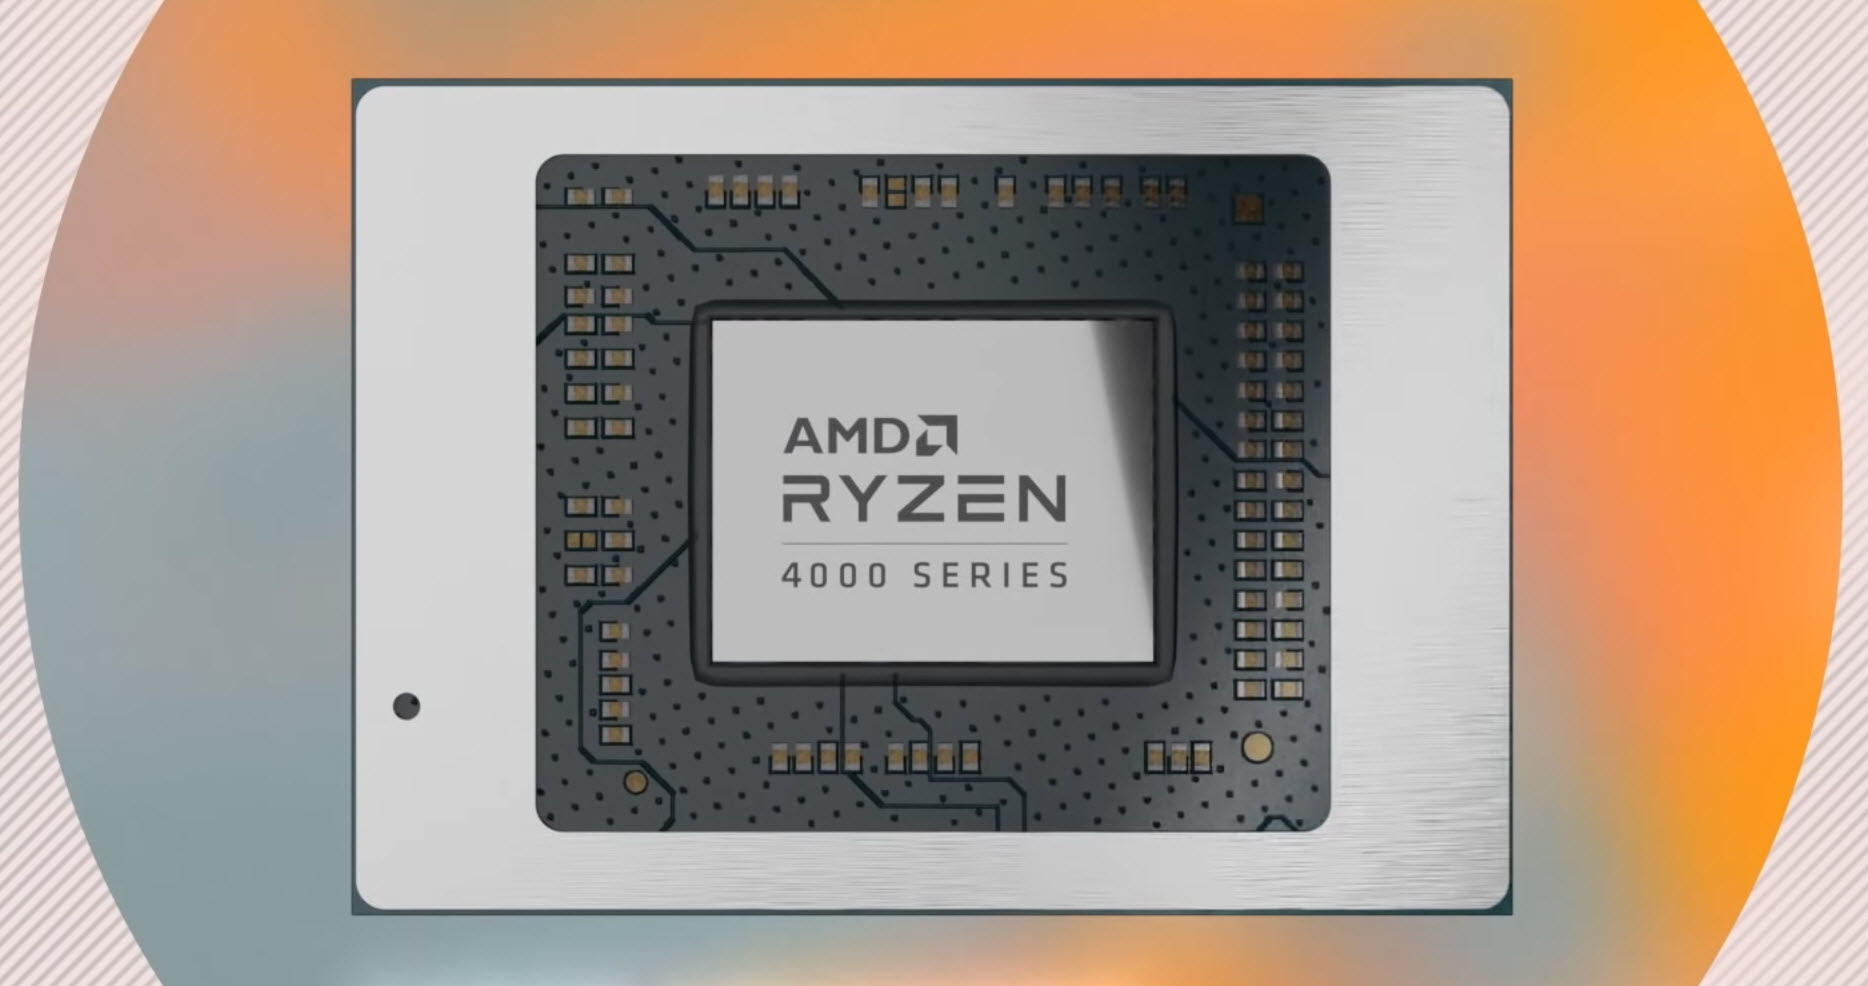 2020 05 09 15 47 57 AMD นำเสนอประสิทธิภาพการประมวลผล และความยืดหยุ่นในการทำงานที่ยอดเยี่ยมด้วย AMD Ryzen PRO 4000 Series Mobile Processor